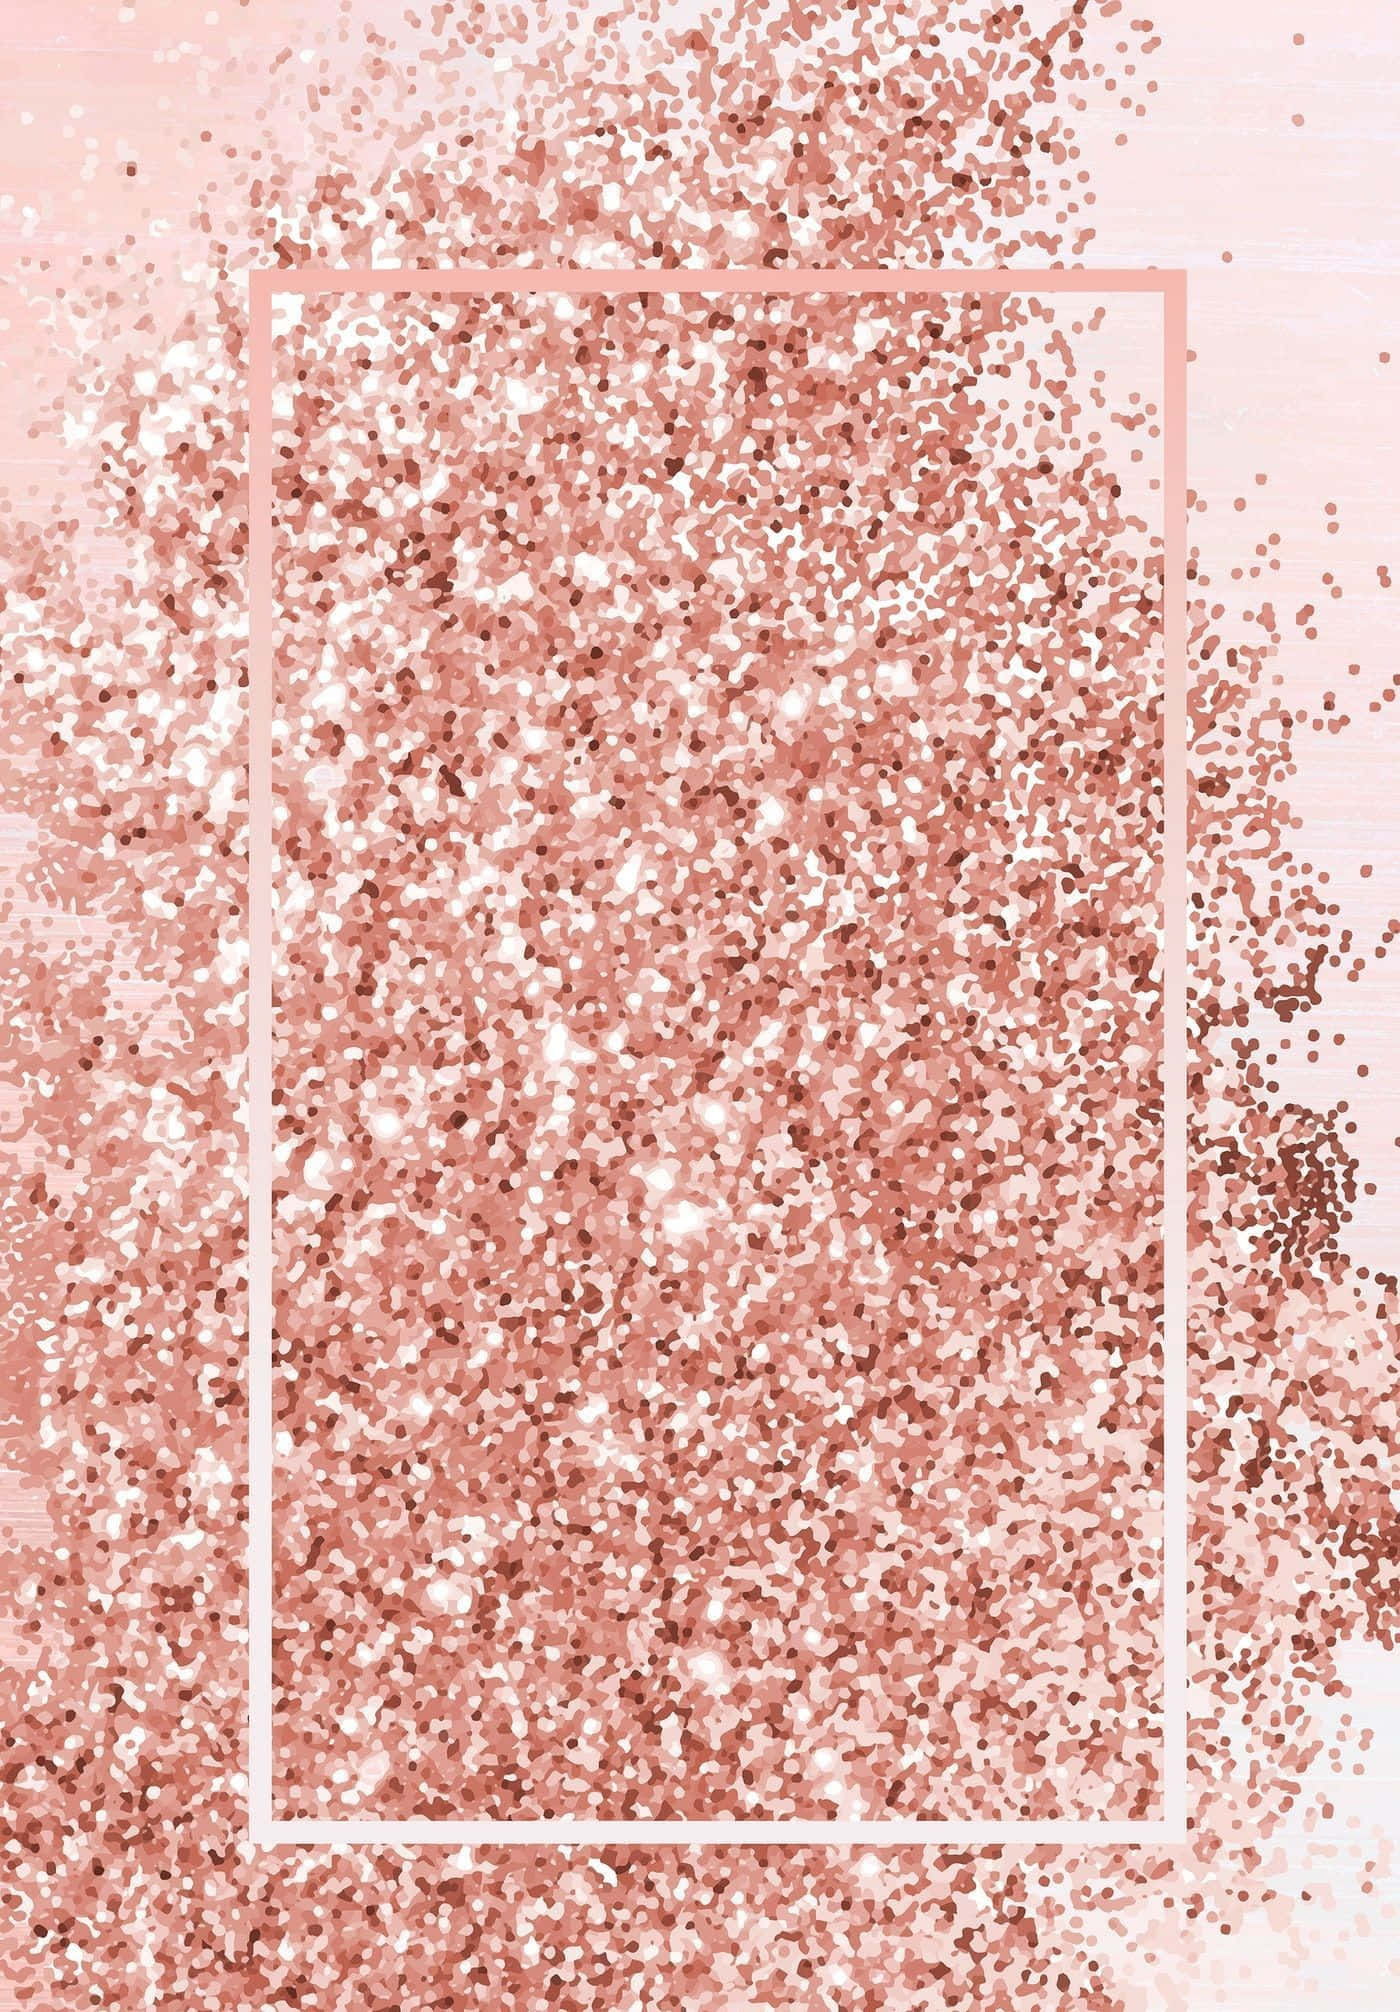 Download Glitter Rose Gold Background | Wallpapers.com